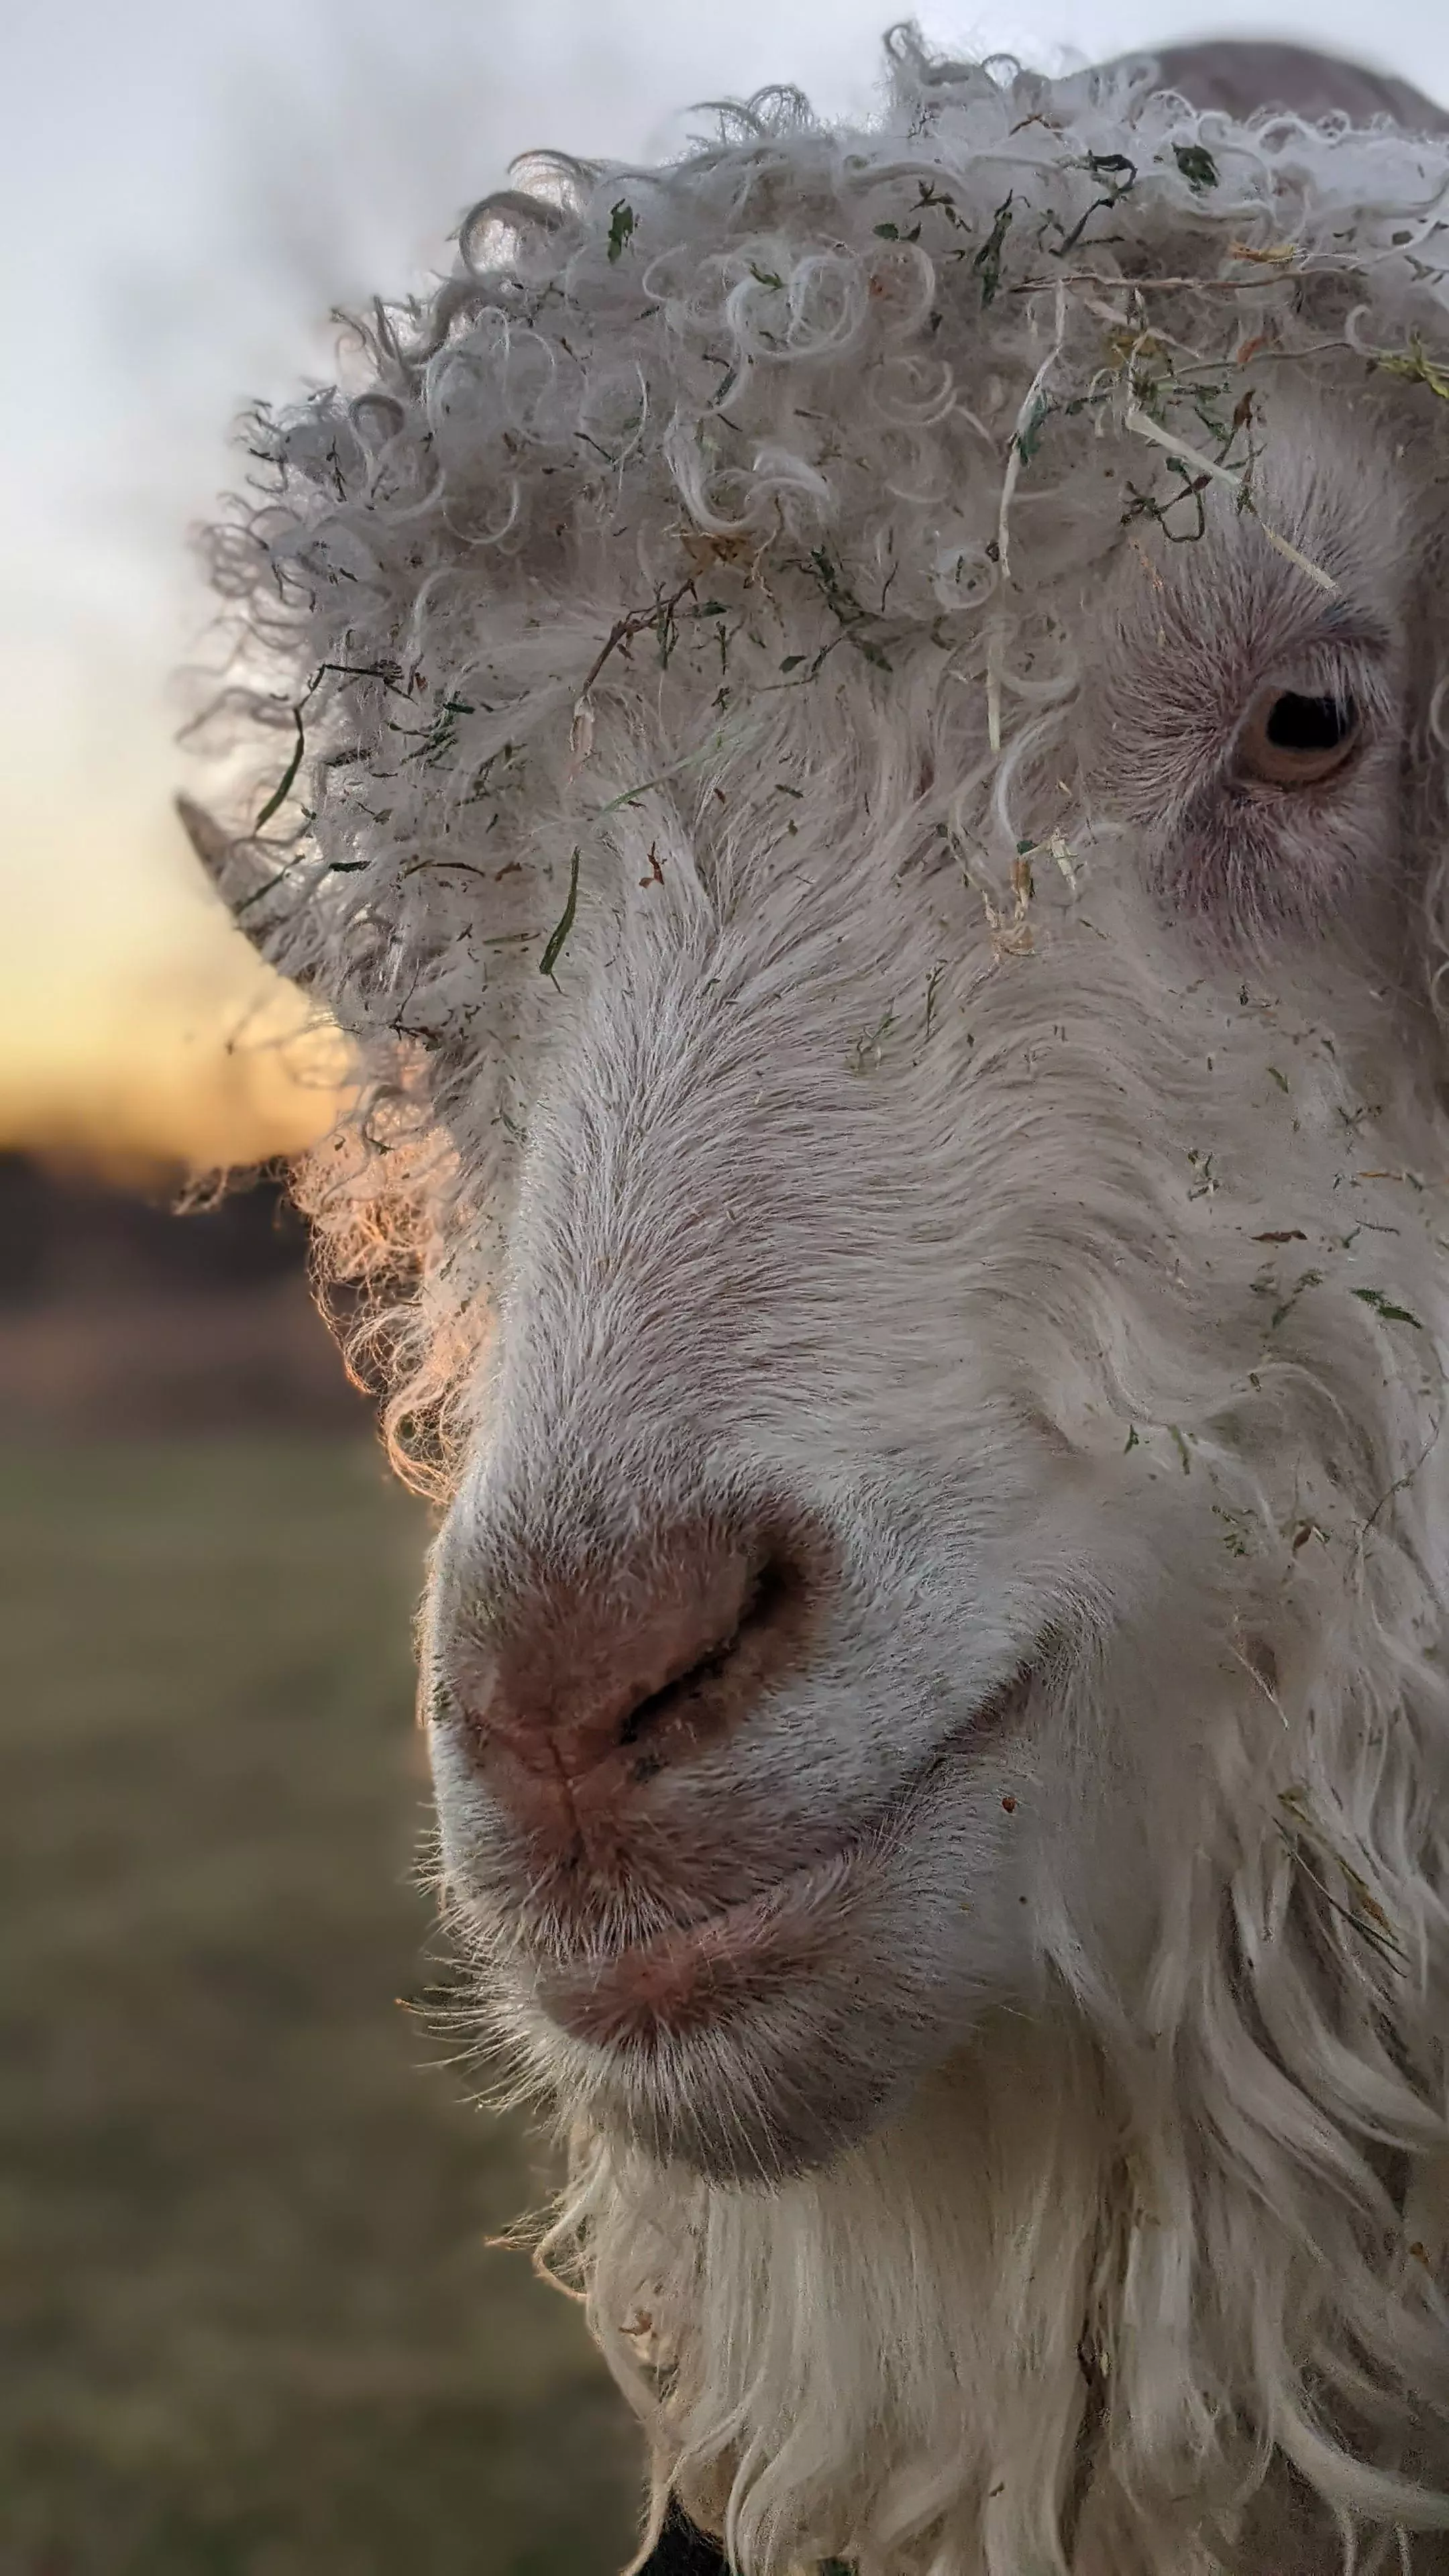 A portrait image of a goat named Mercury